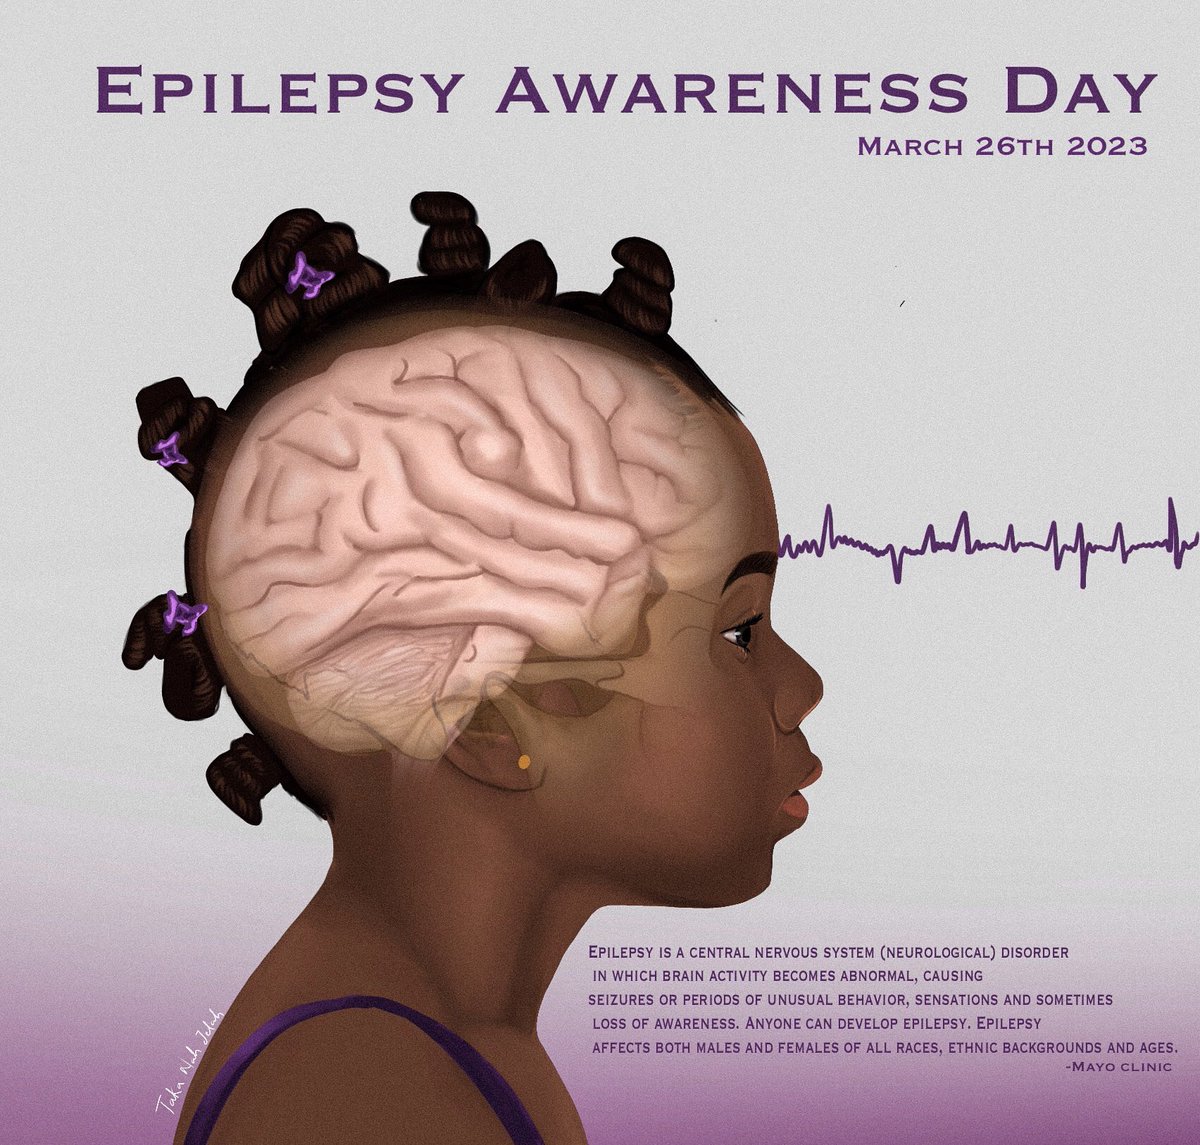 Today is #EpilepsyAwarenessDay . We wear purple in solidarity. #healthawareness #neurologicaldisorder #mayoclinic @MayoClinic